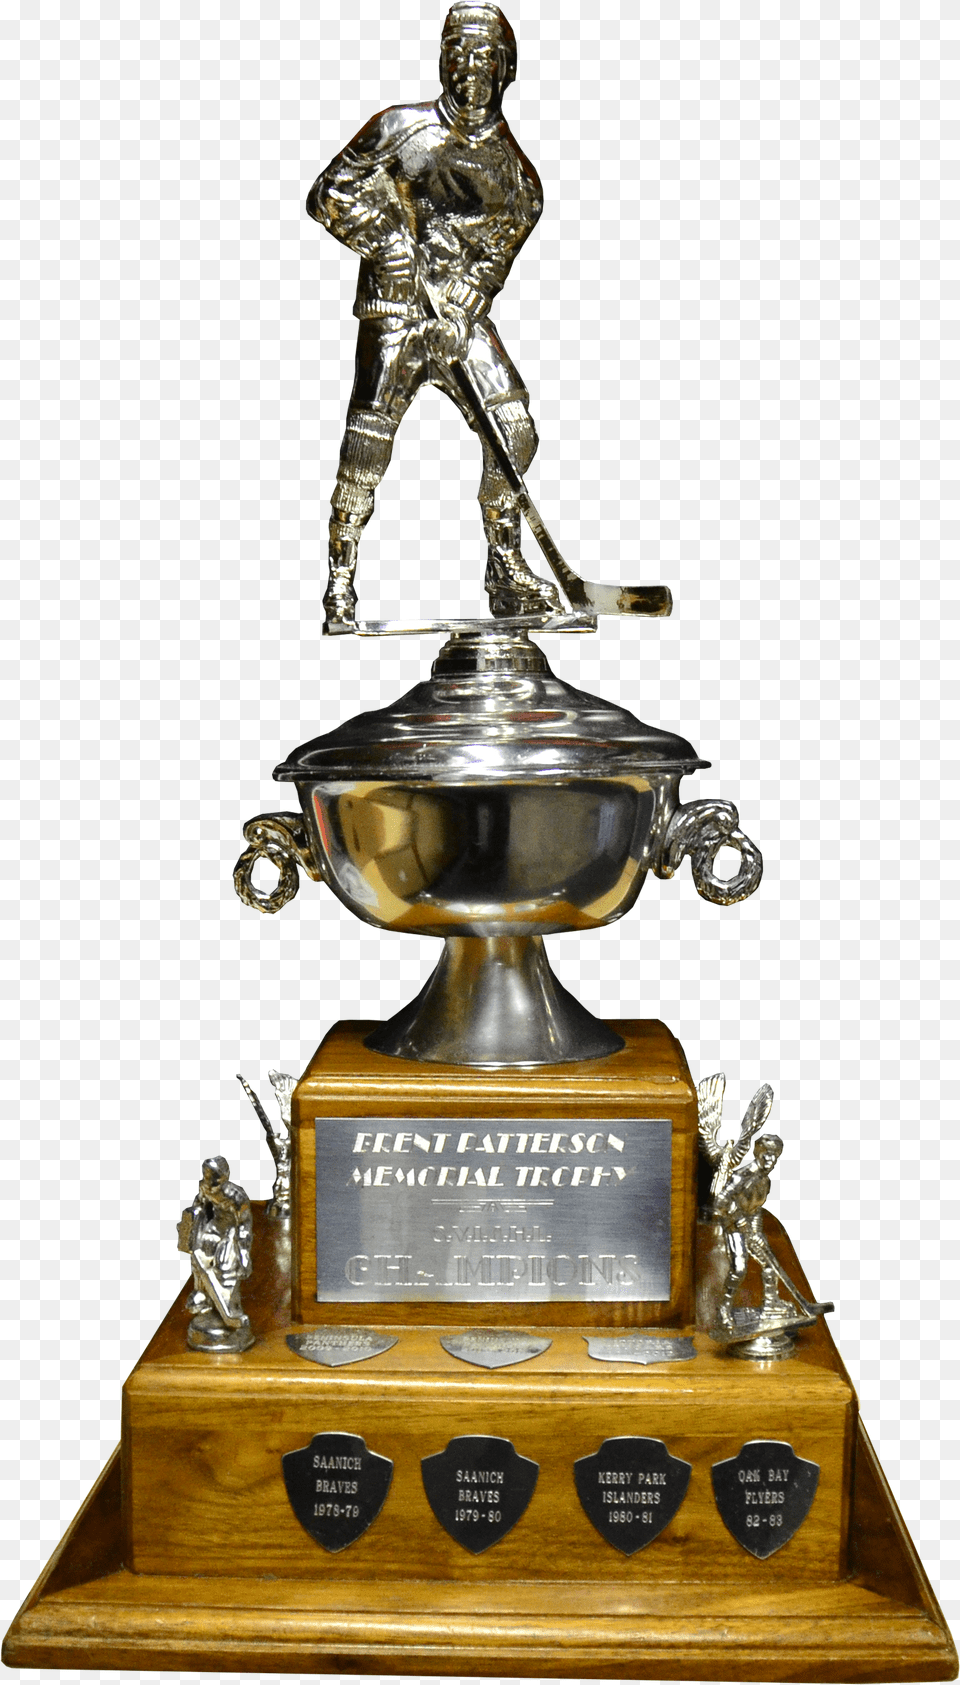 Brent Patterson Memorial Trophy Trophy Png Image